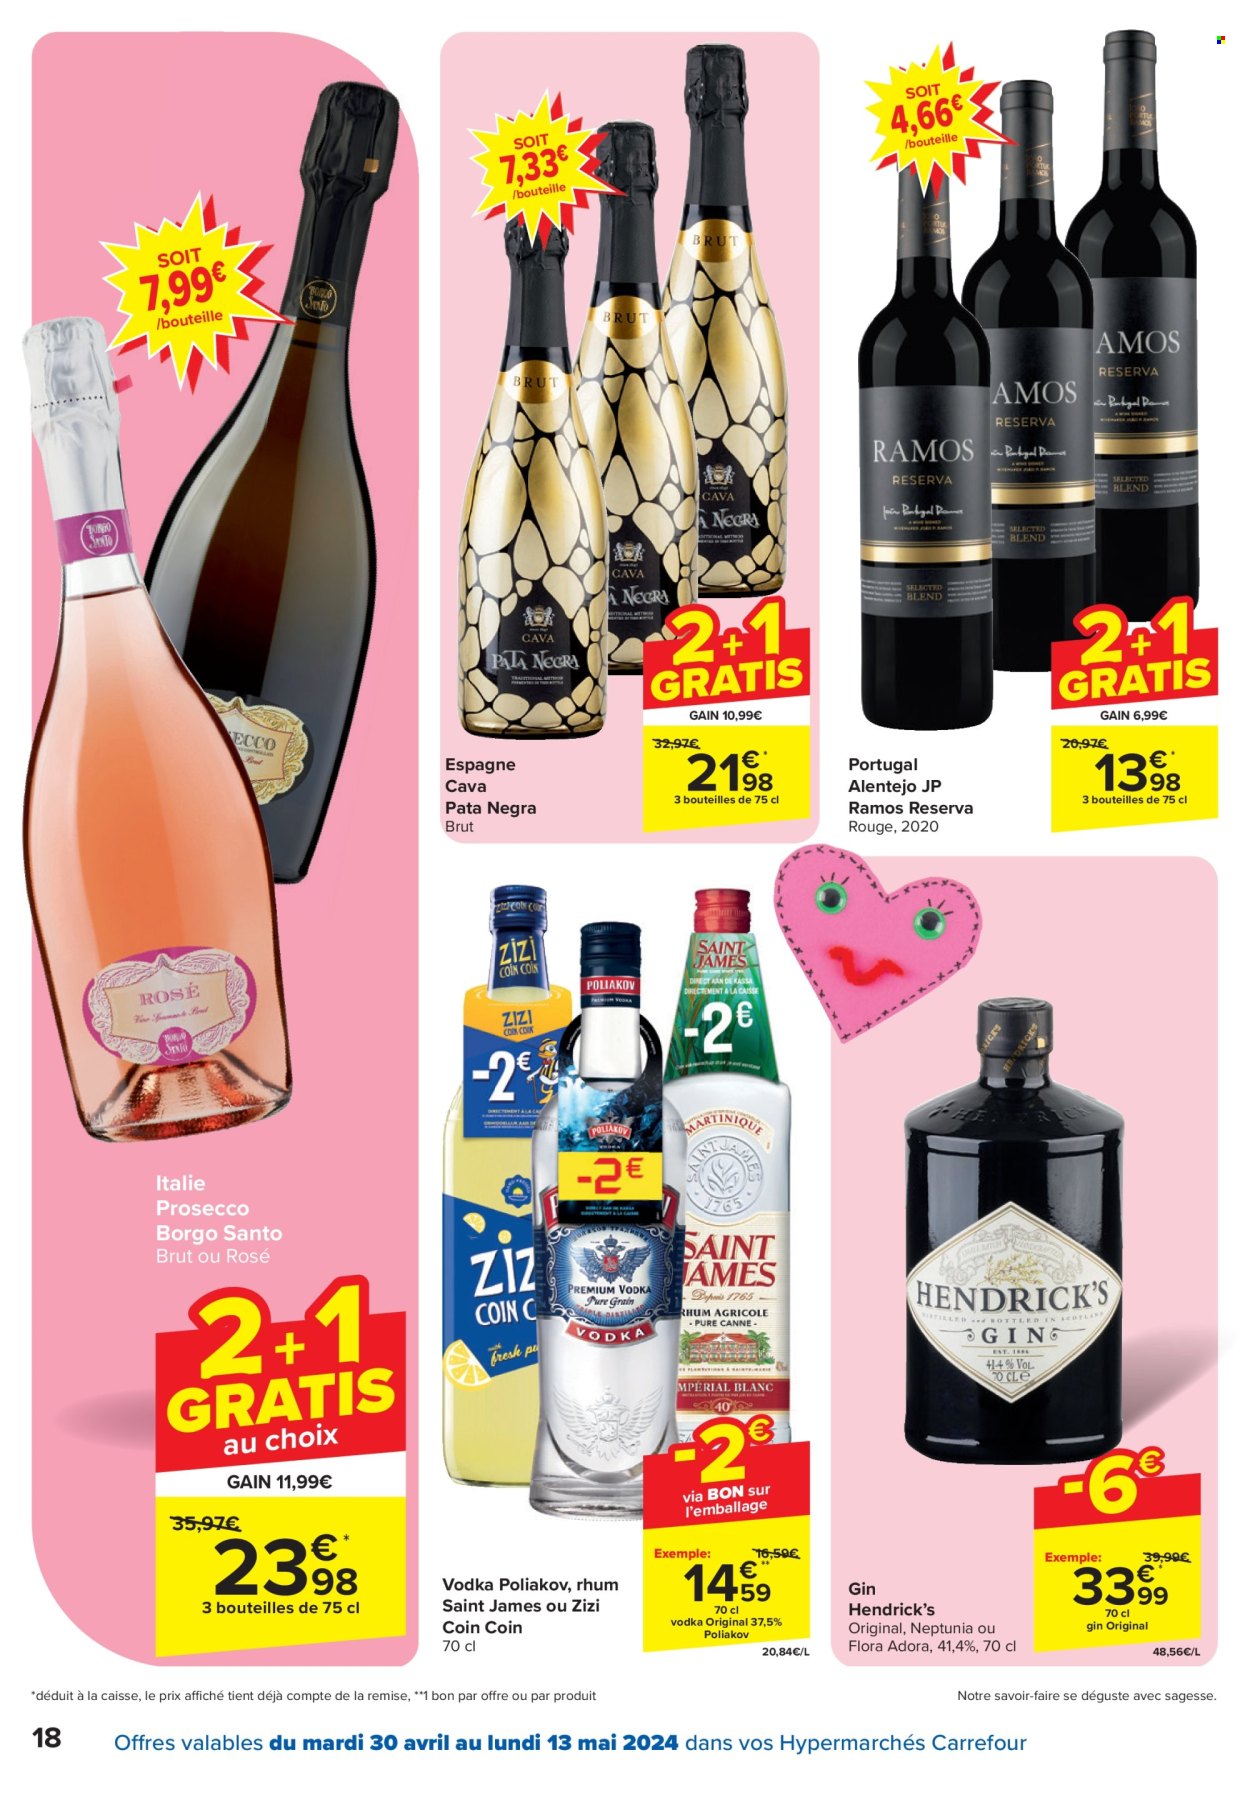 thumbnail - Catalogue Carrefour hypermarkt - 30/04/2024 - 13/05/2024 - Produits soldés - alcool, vin pétillant, gin, vodka, rhum, Poliakov, Prosecco. Page 18.